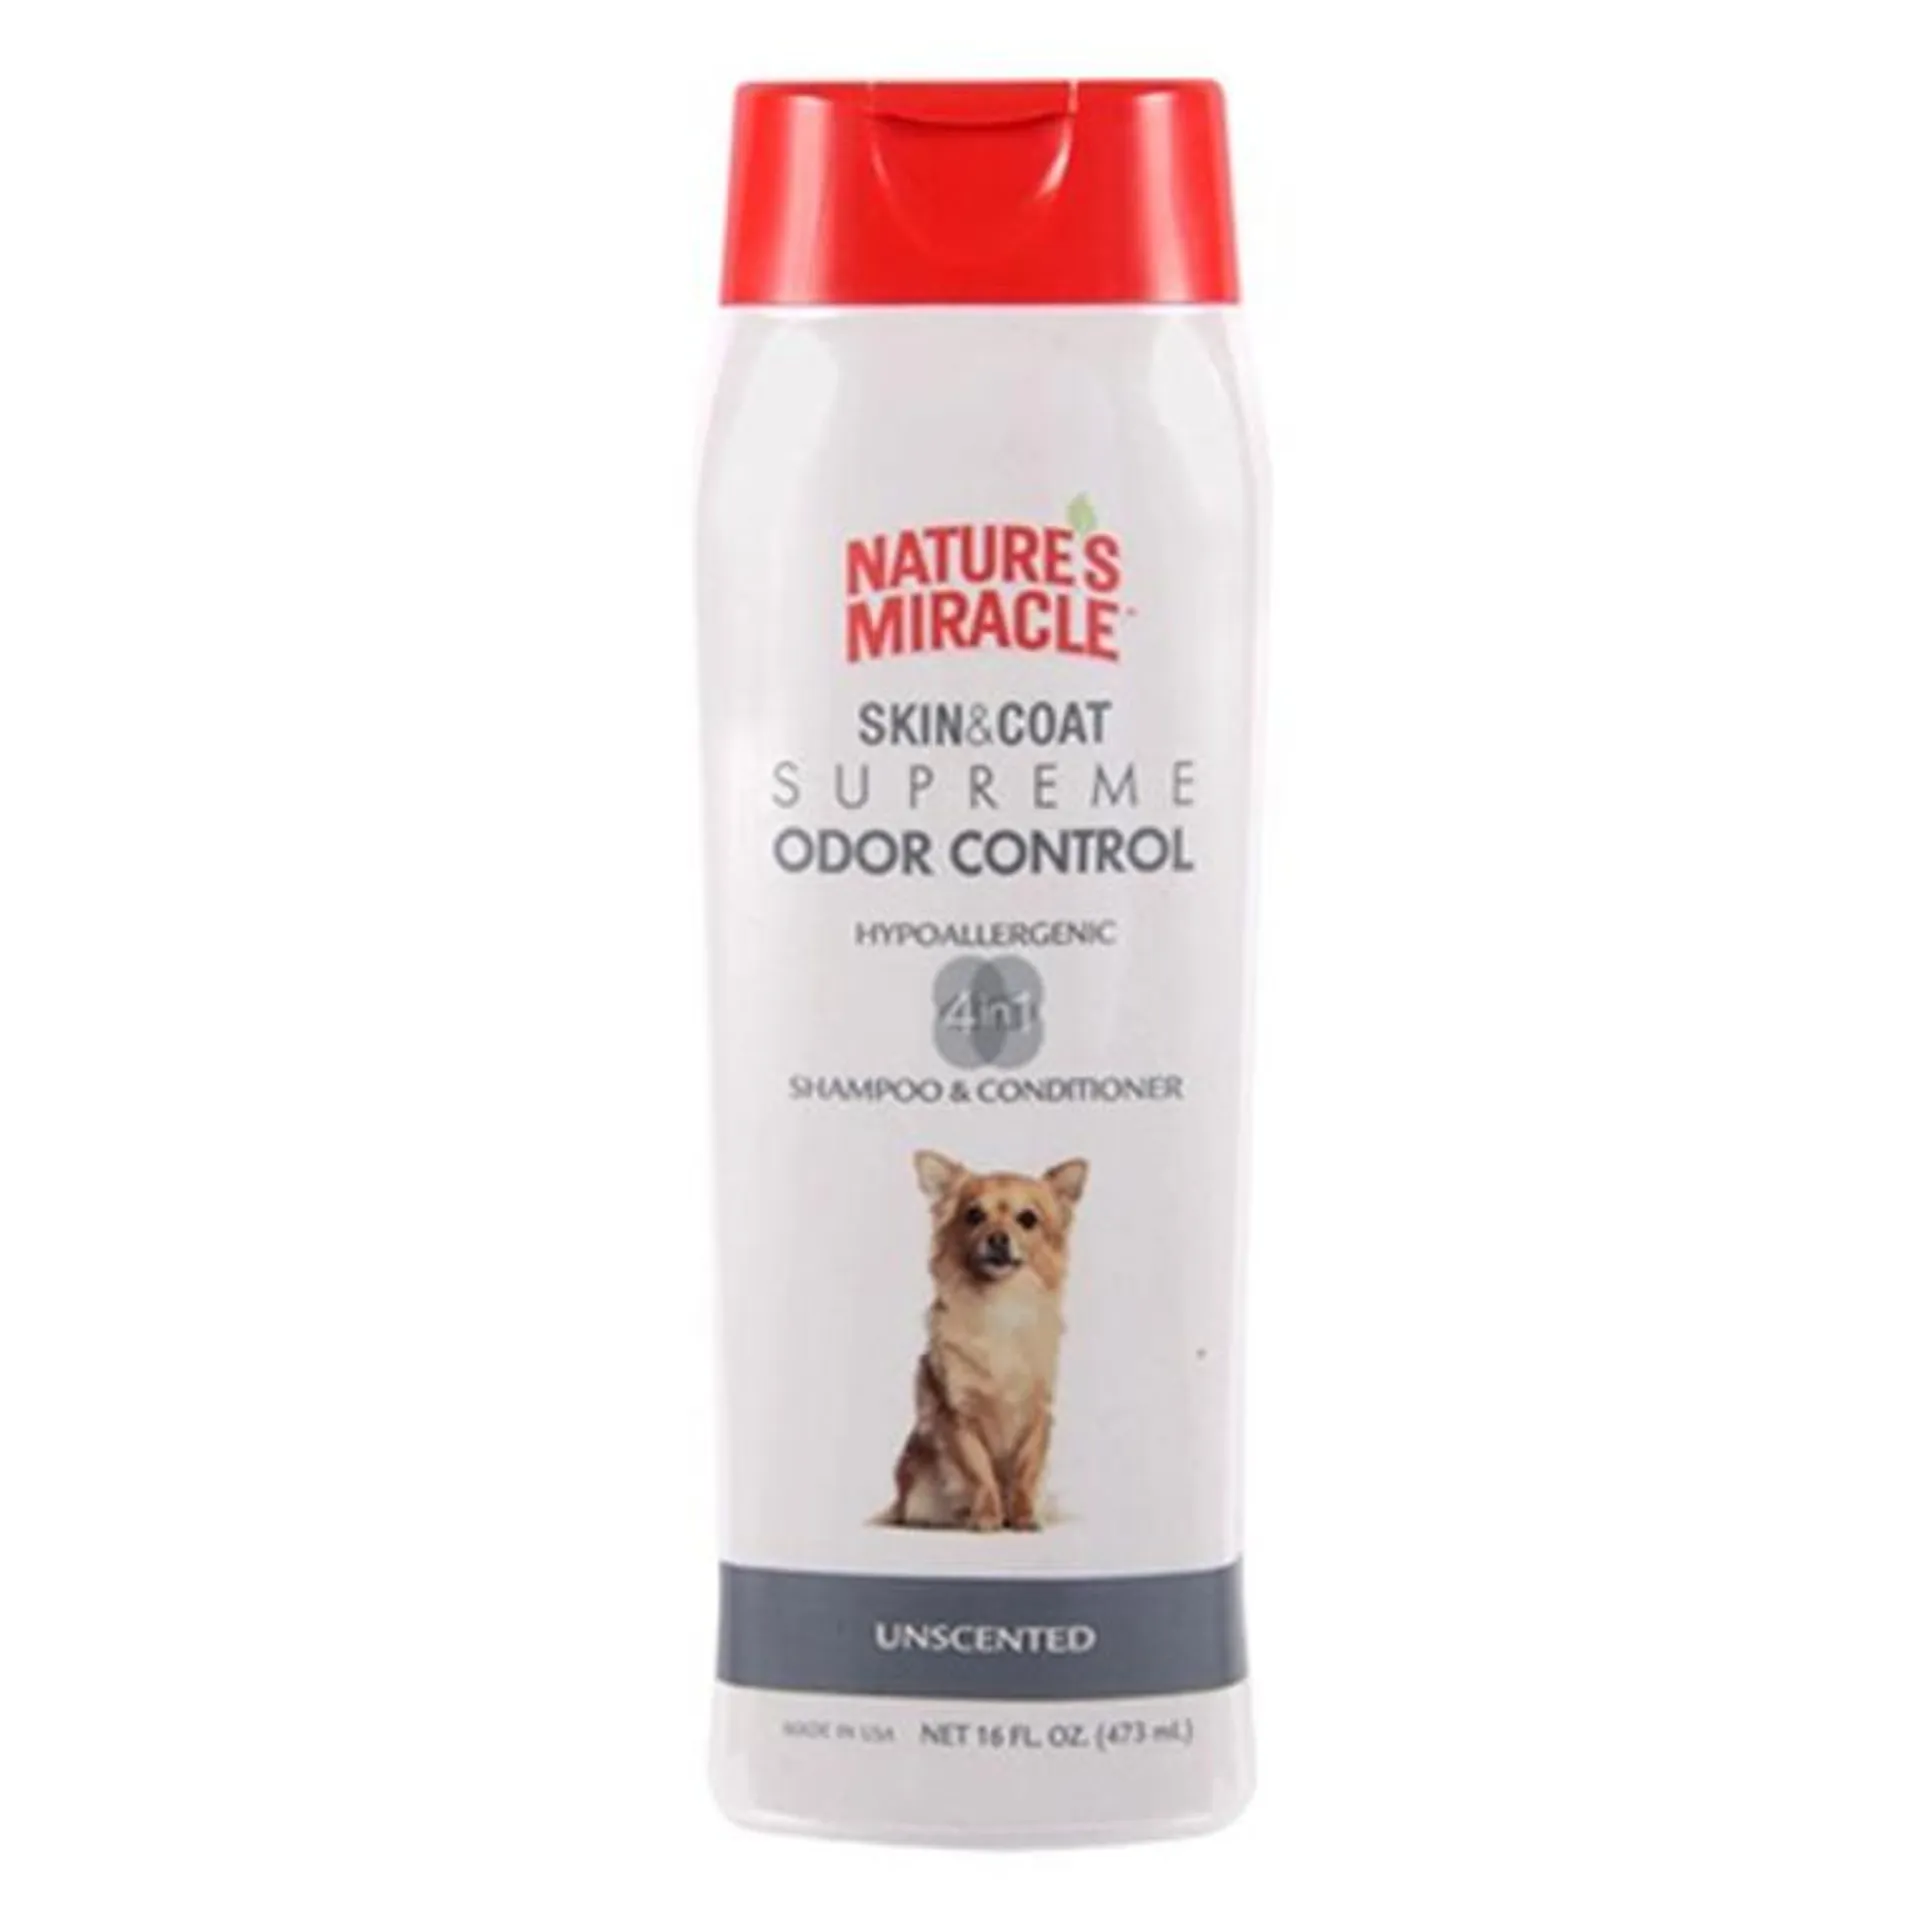 Nature’s Miracle Skin & Coat Supreme Odor Control - Hypoallergenic Shampoo & Conditioner